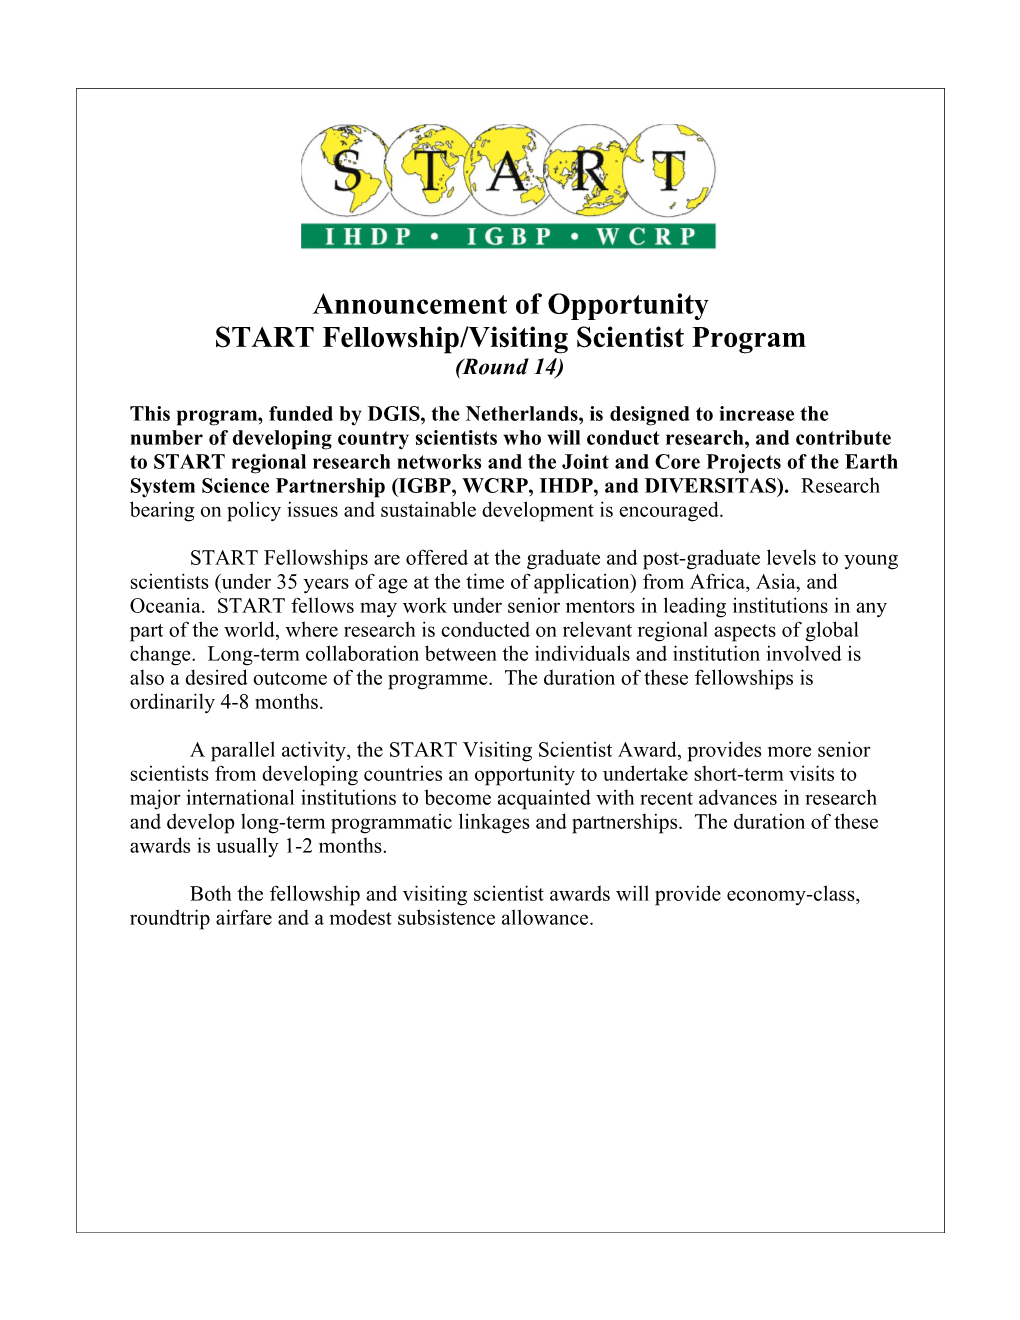 START Fellowship/Visiting Scientist Program